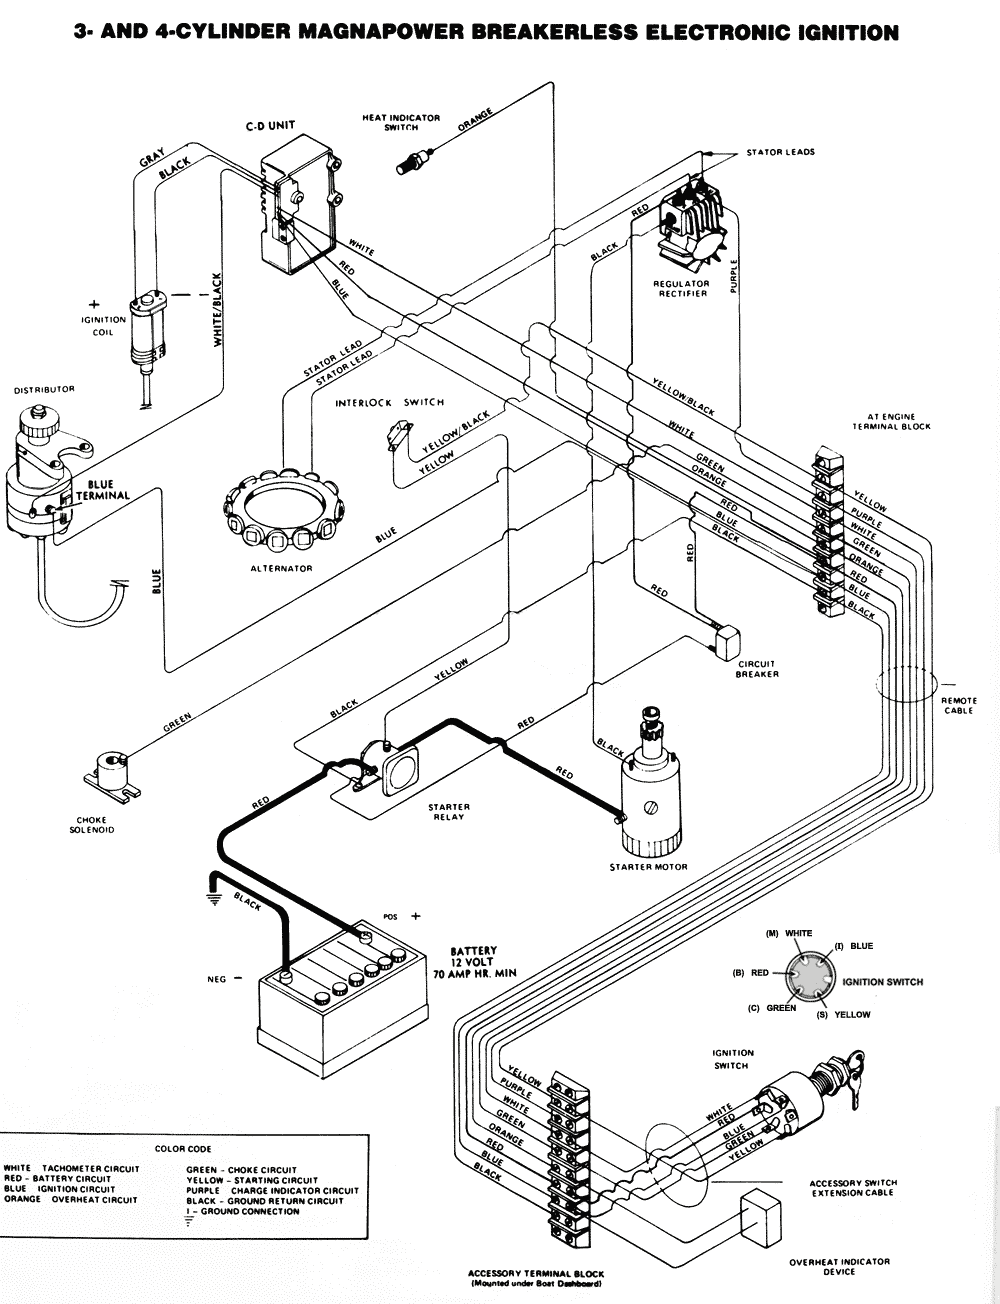 mercathode wiring diagram